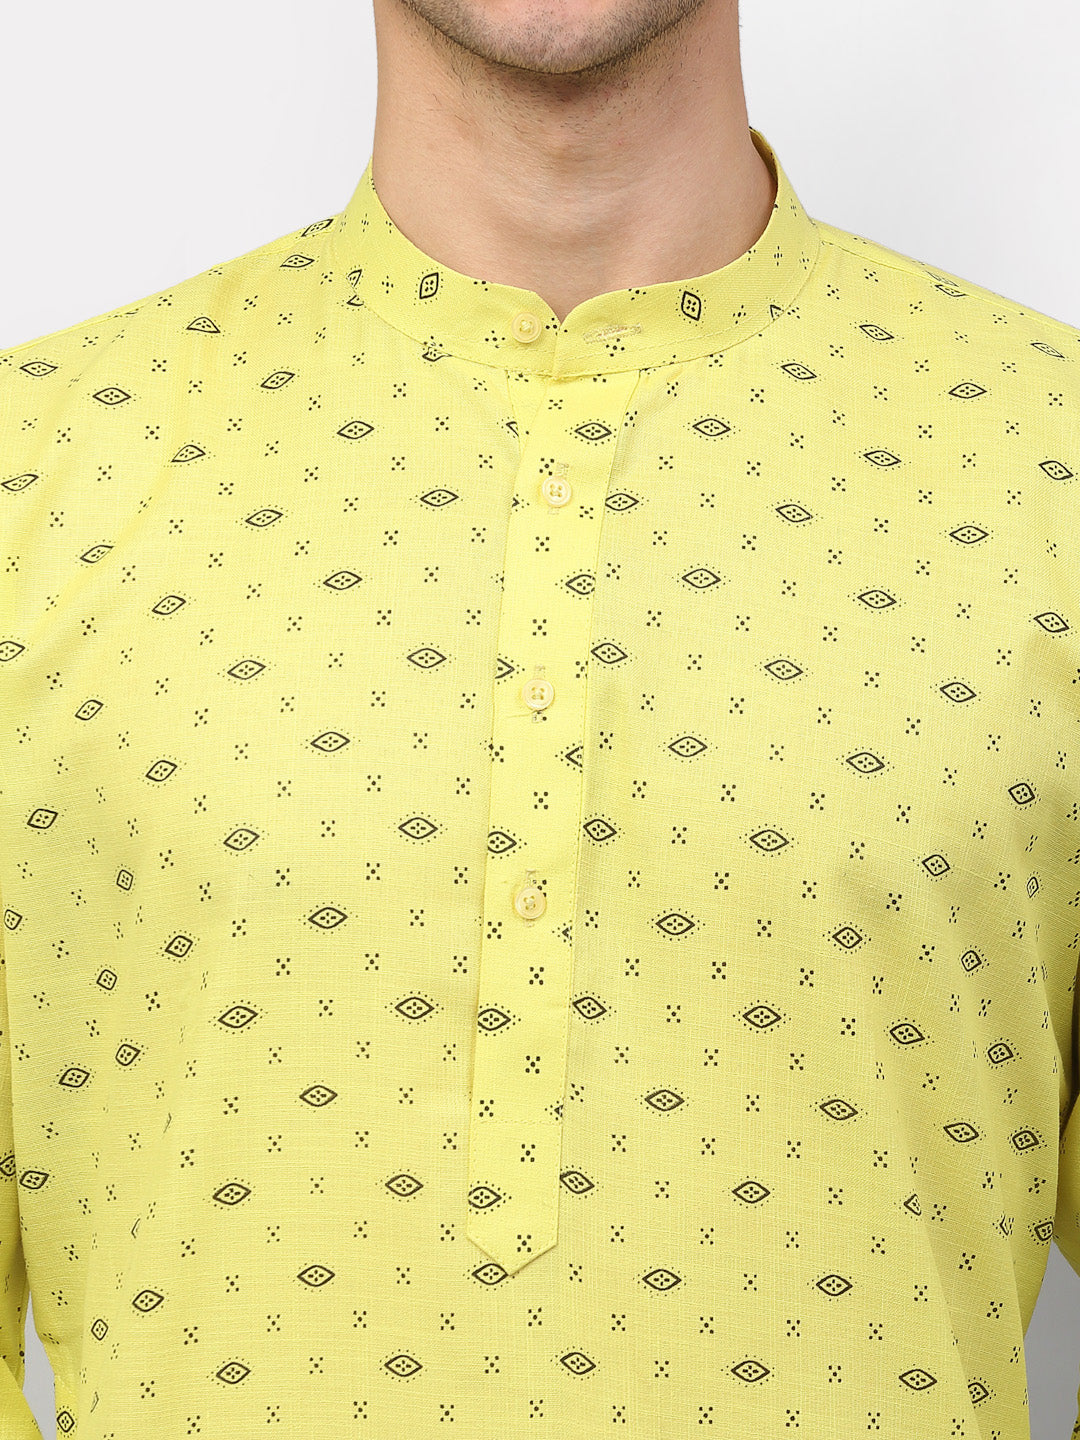 Jompers Men's Lemon Printed Cotton Kurta Payjama Sets